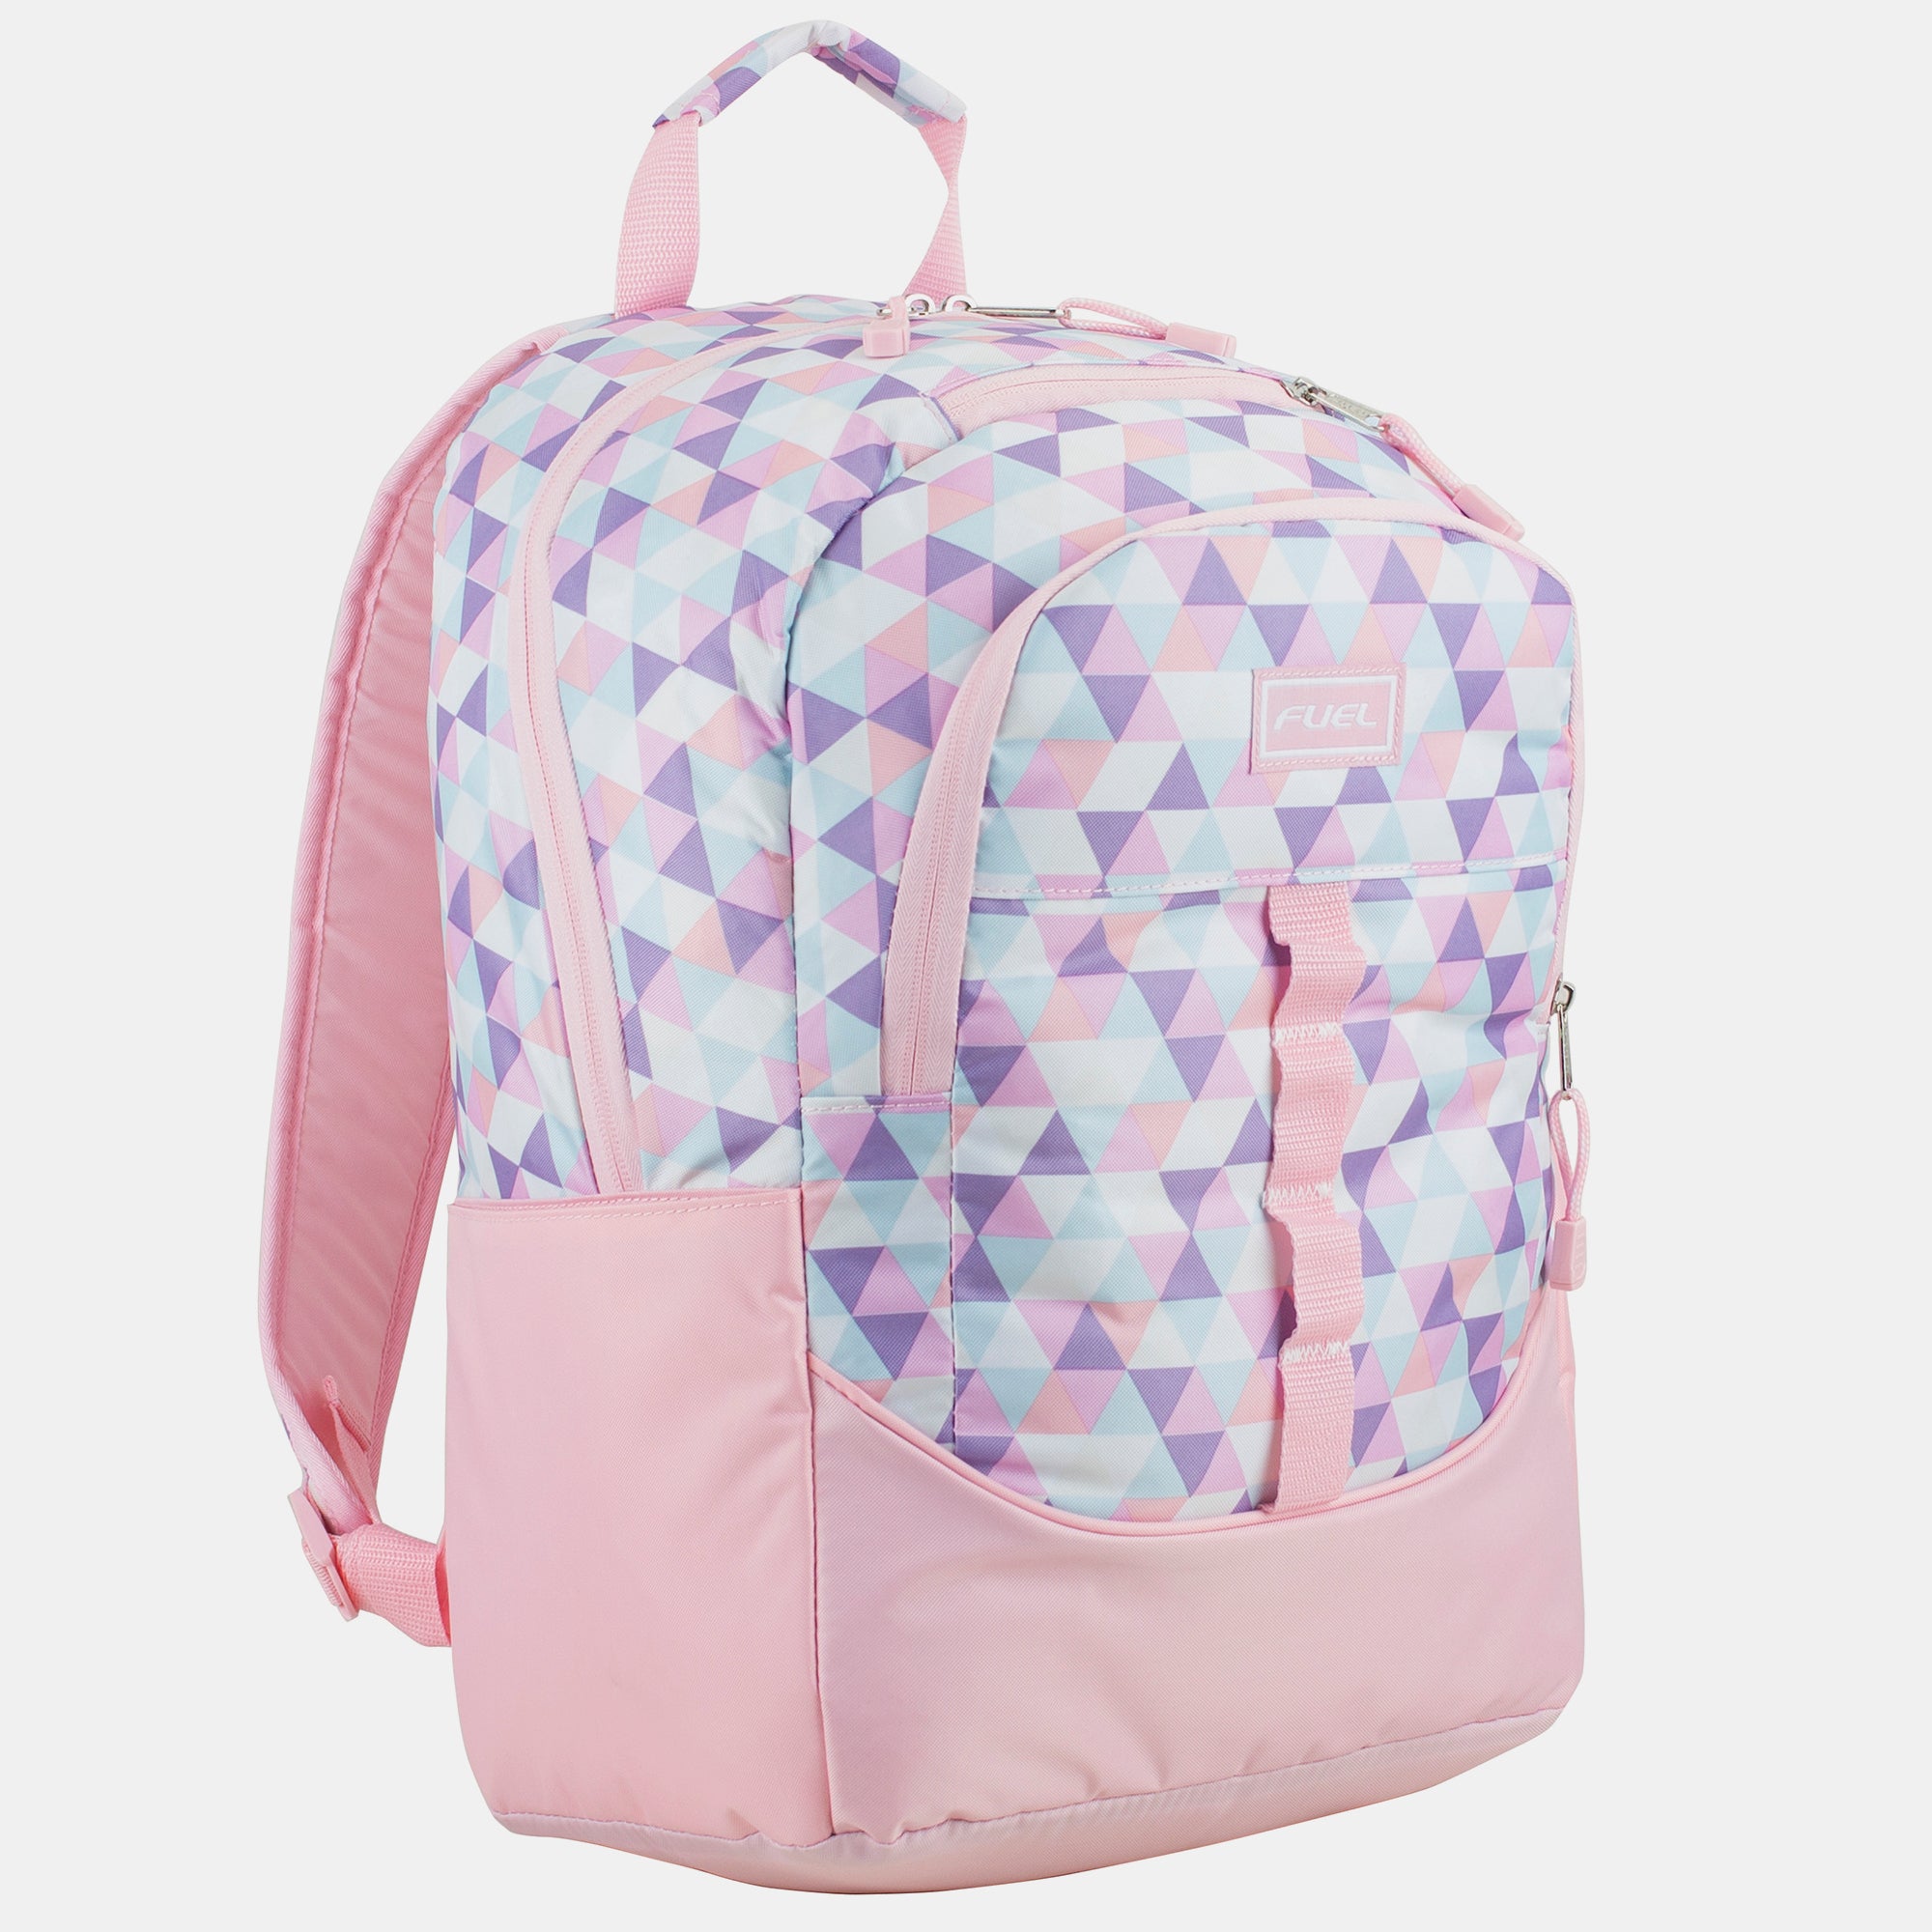 Fuel Multi-Purpose Access School Backpack